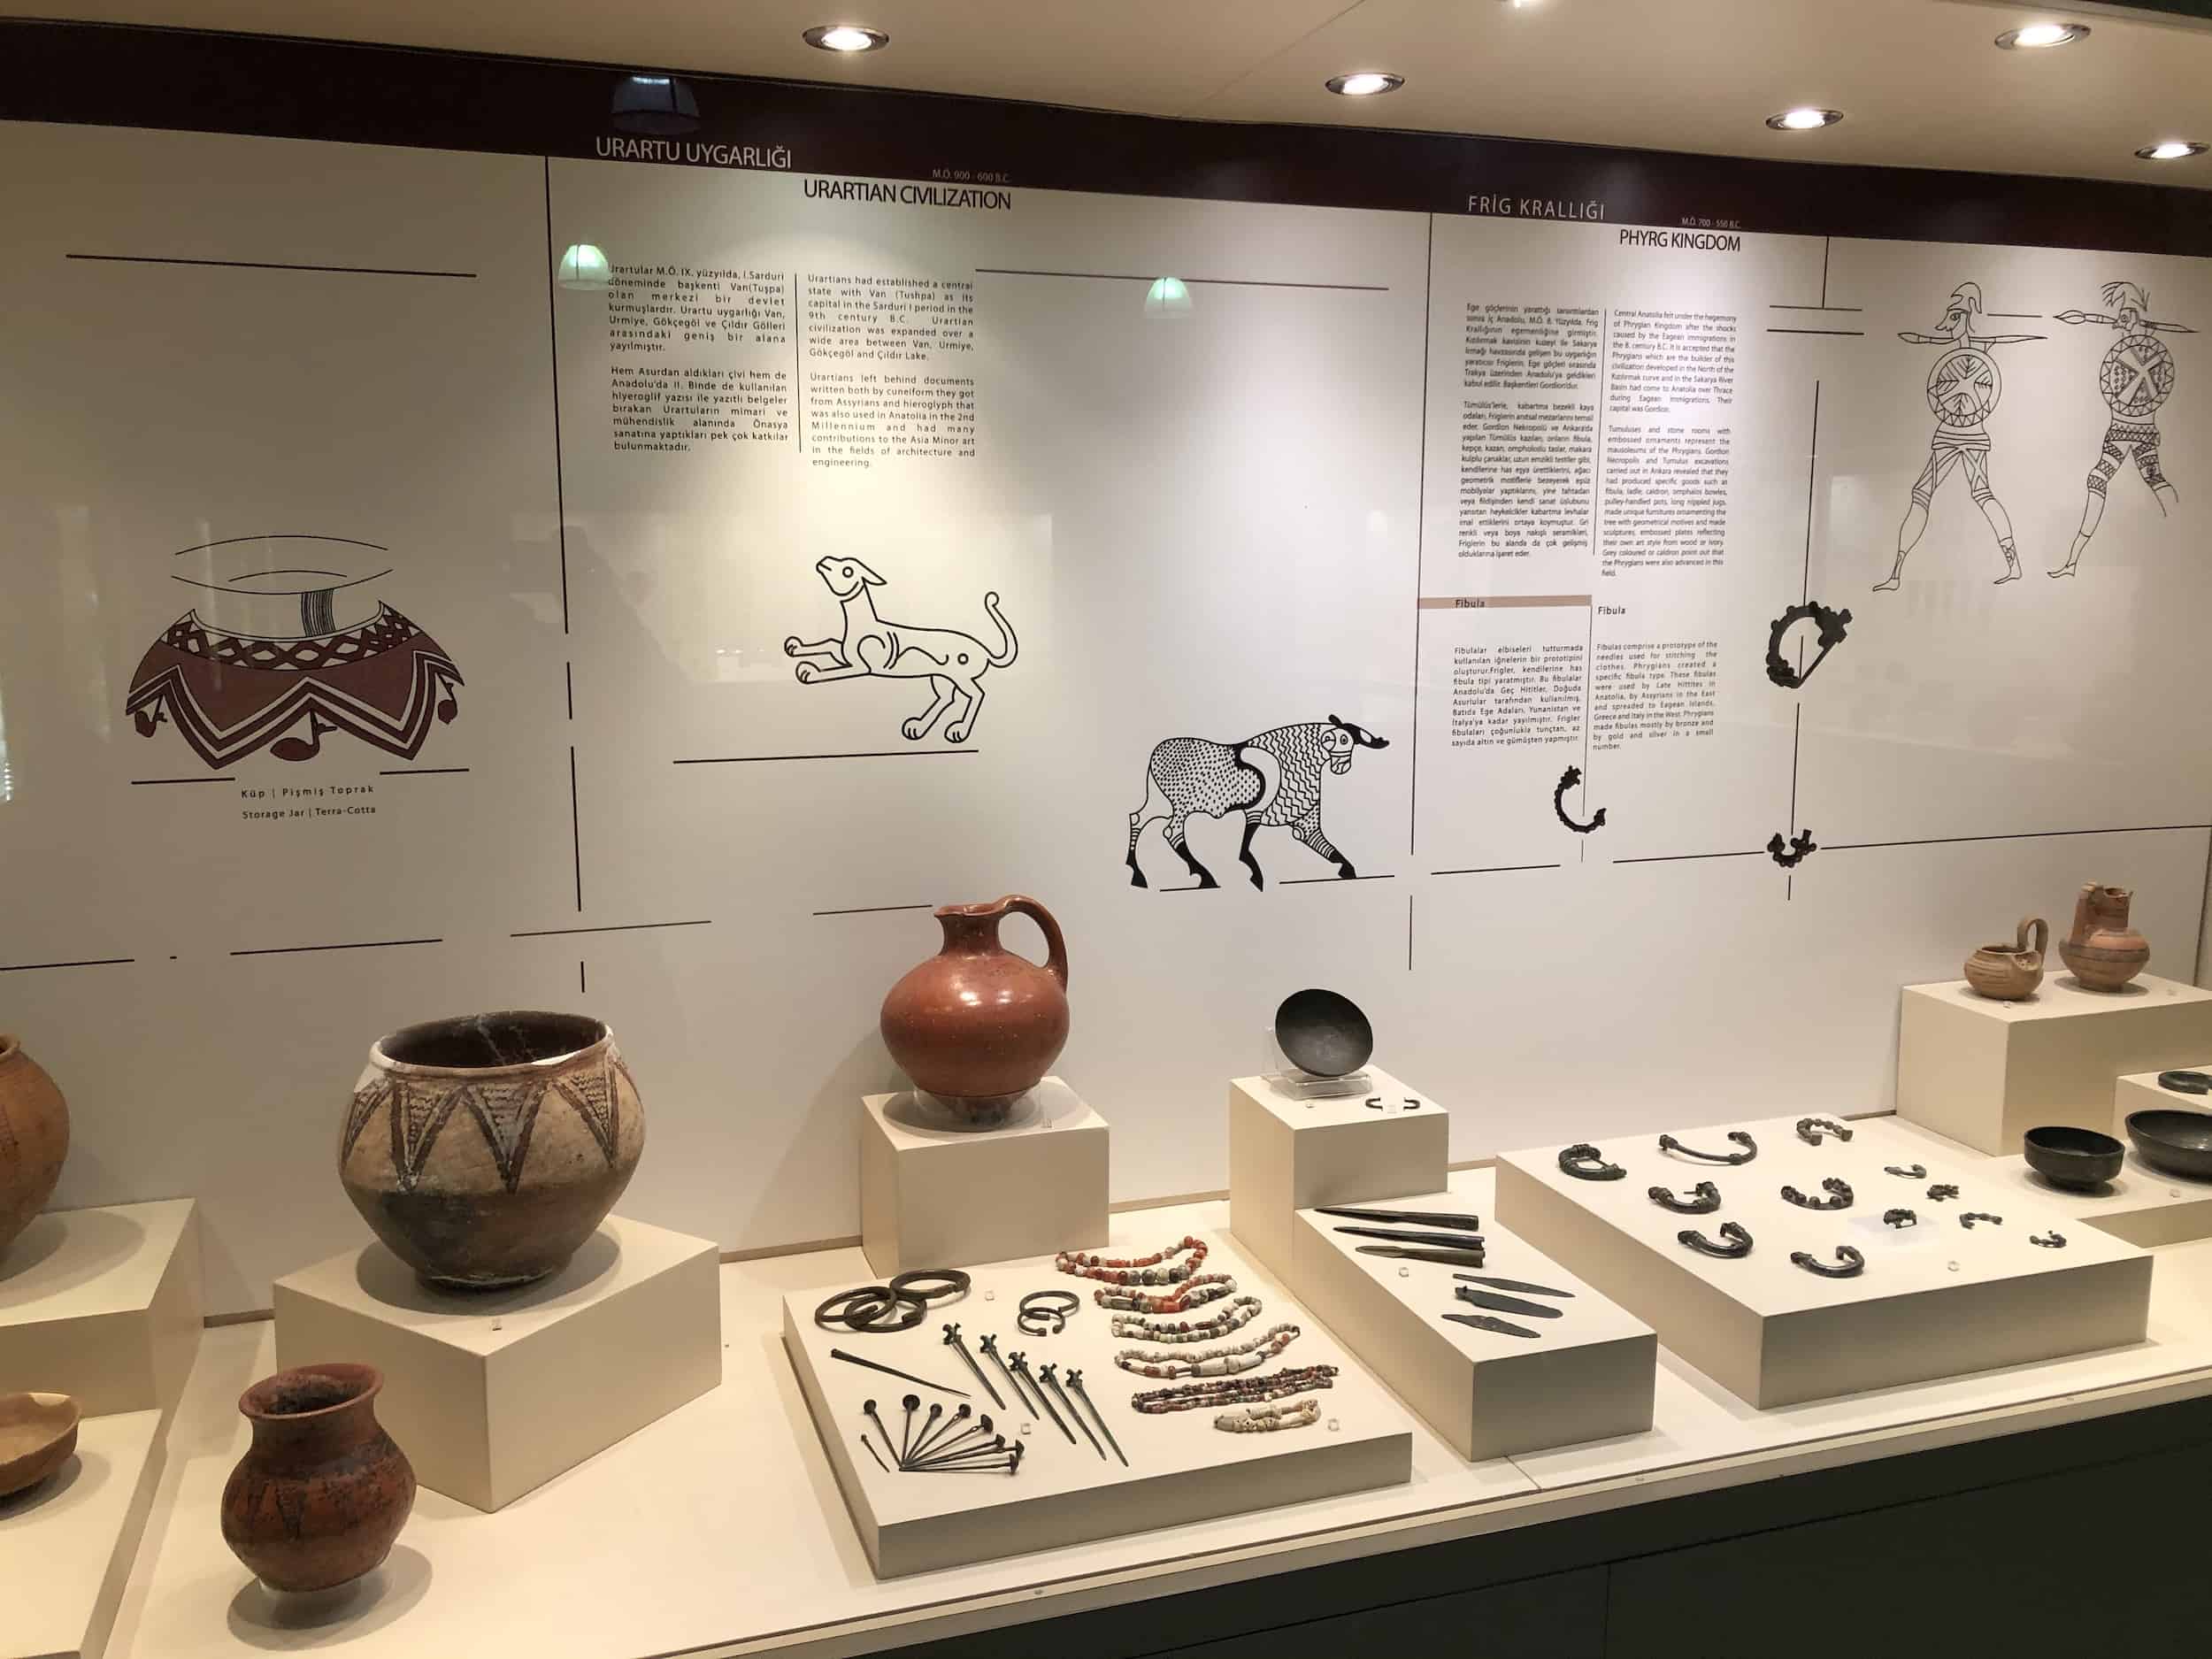 Urartu and Phrygian civilizations at the Bursa Archaeological Museum in Bursa, Turkey